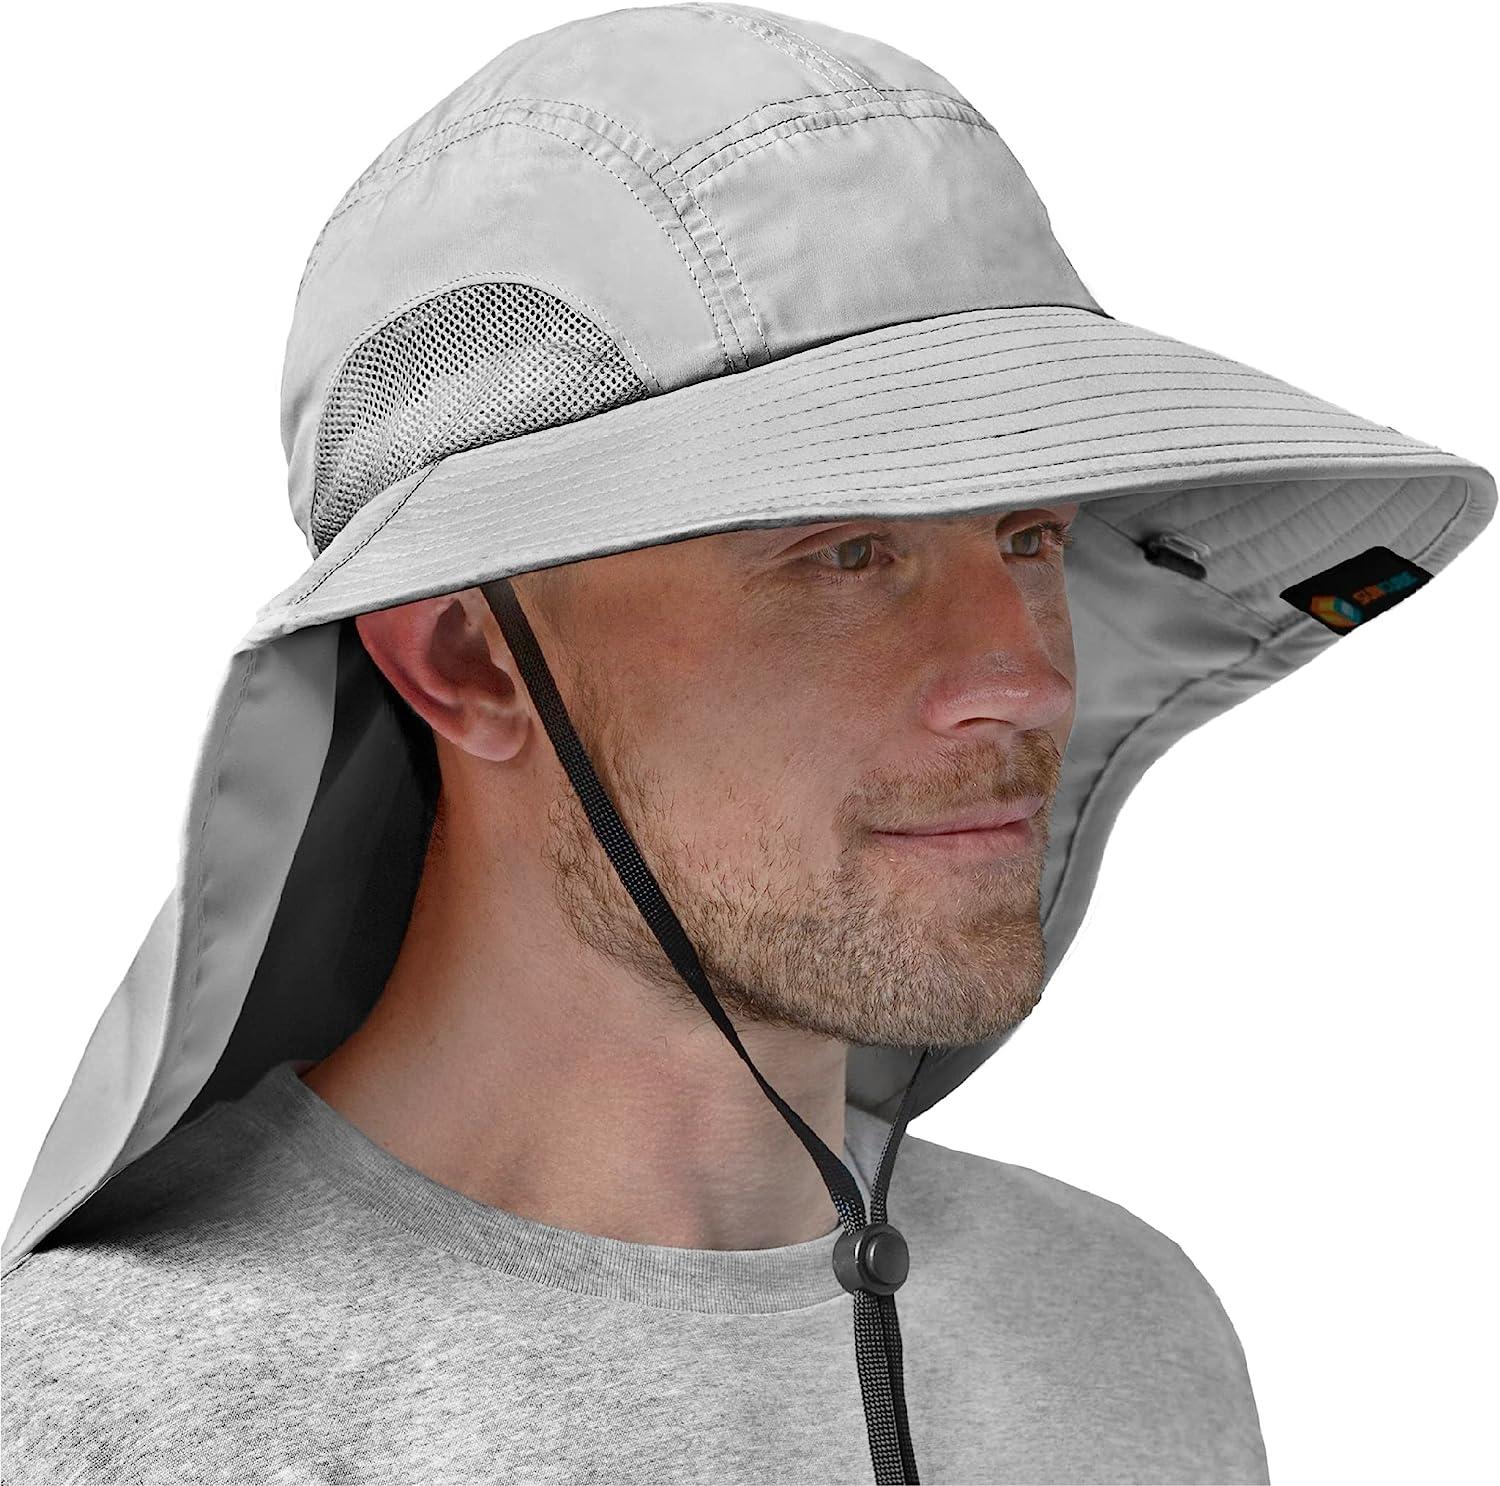 SUN CUBE Wide Brim Sun Hat with Neck Flap, UPF50+ Hiking Safari